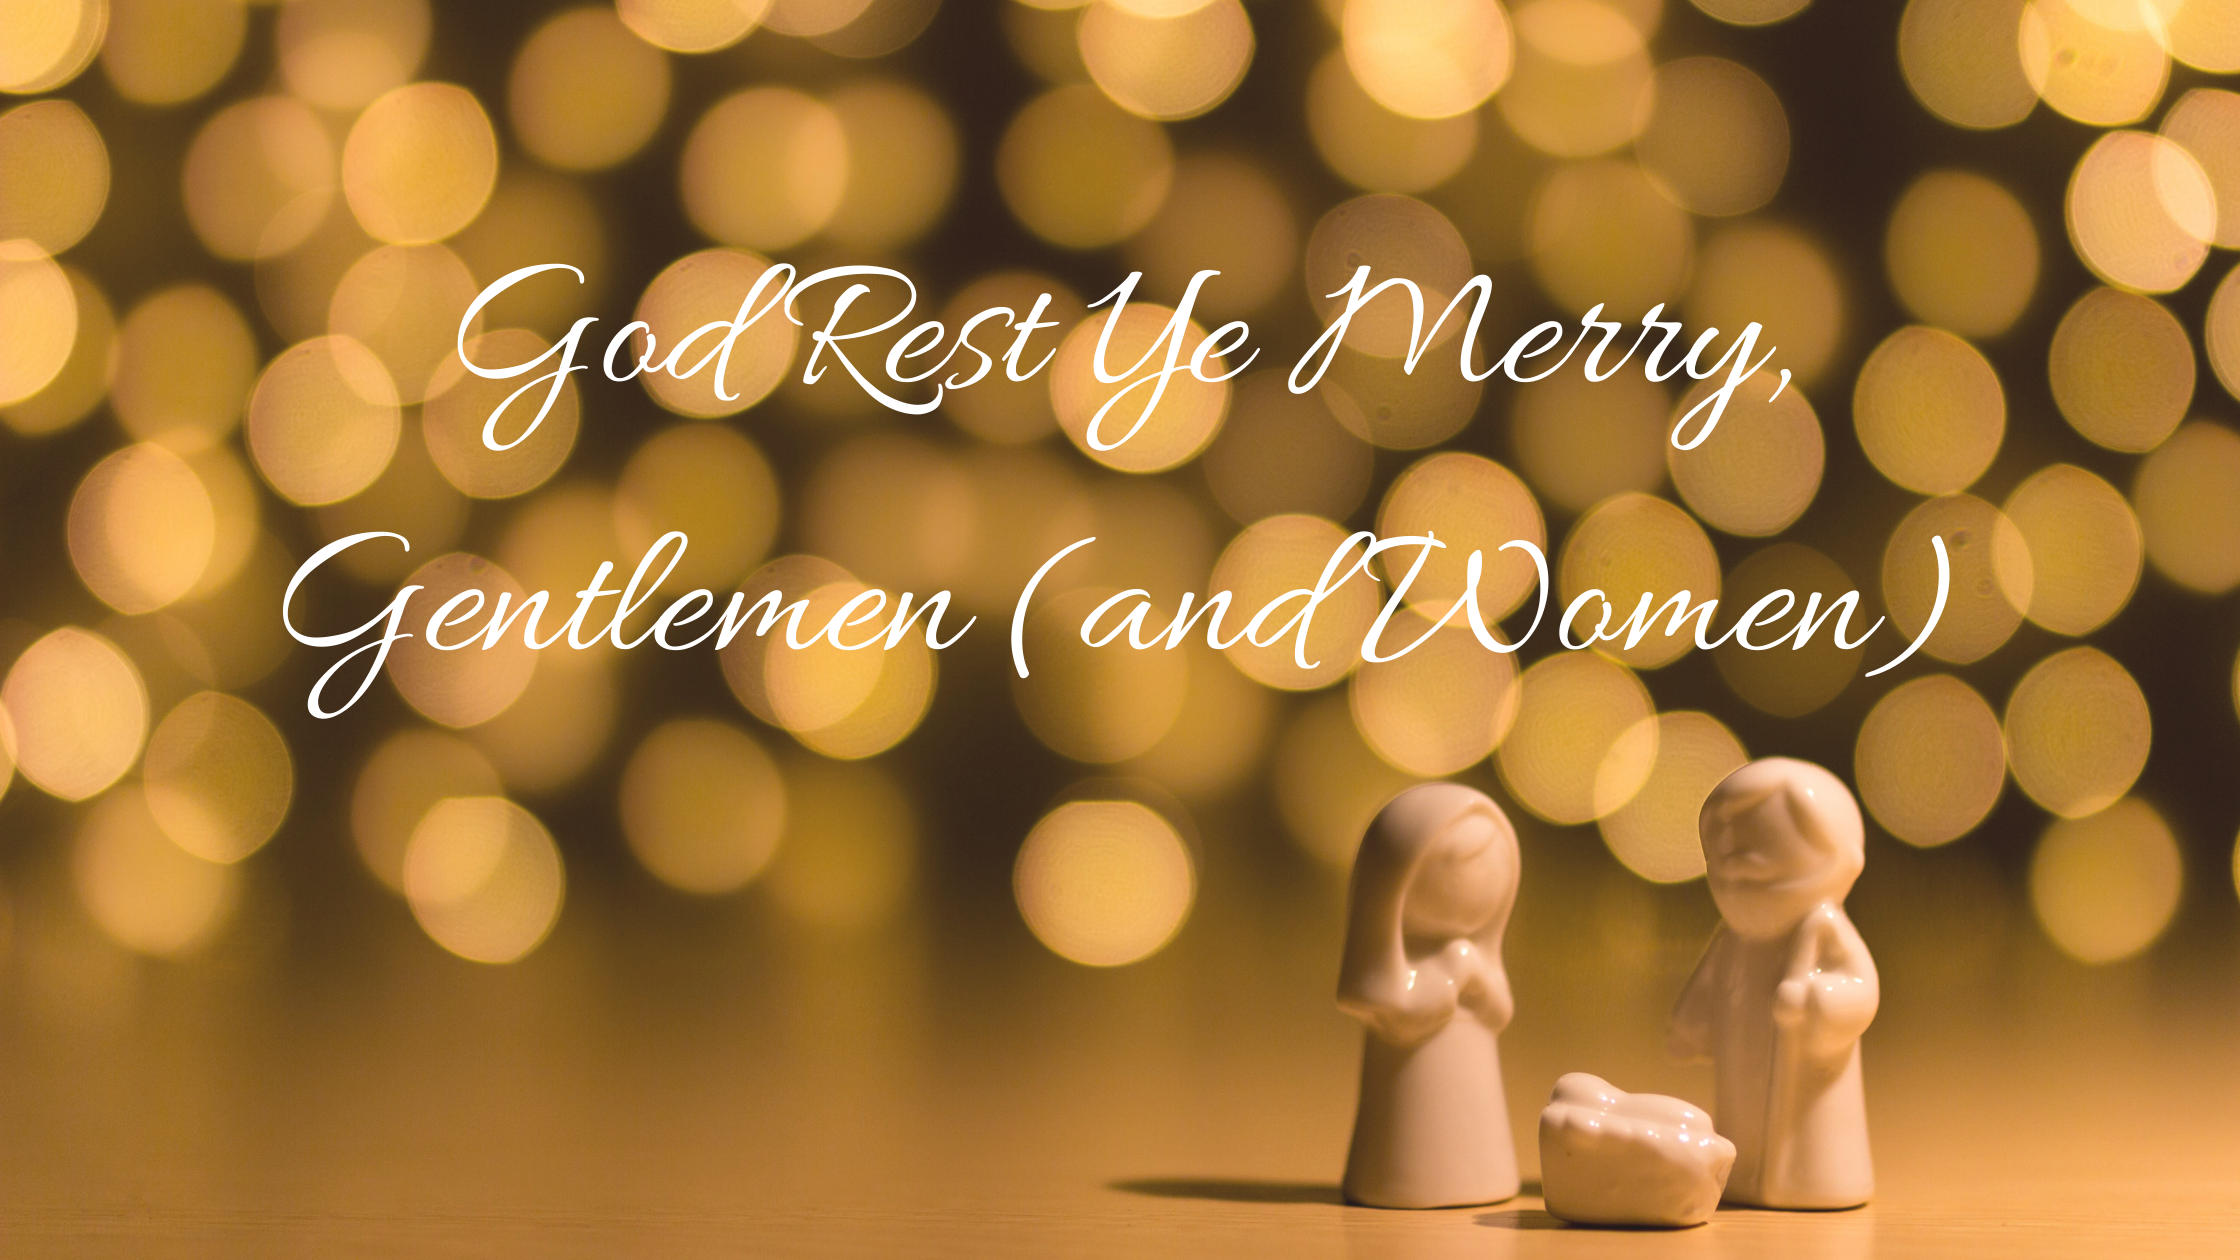 God Rest Ye Merry Gentlemen blog title